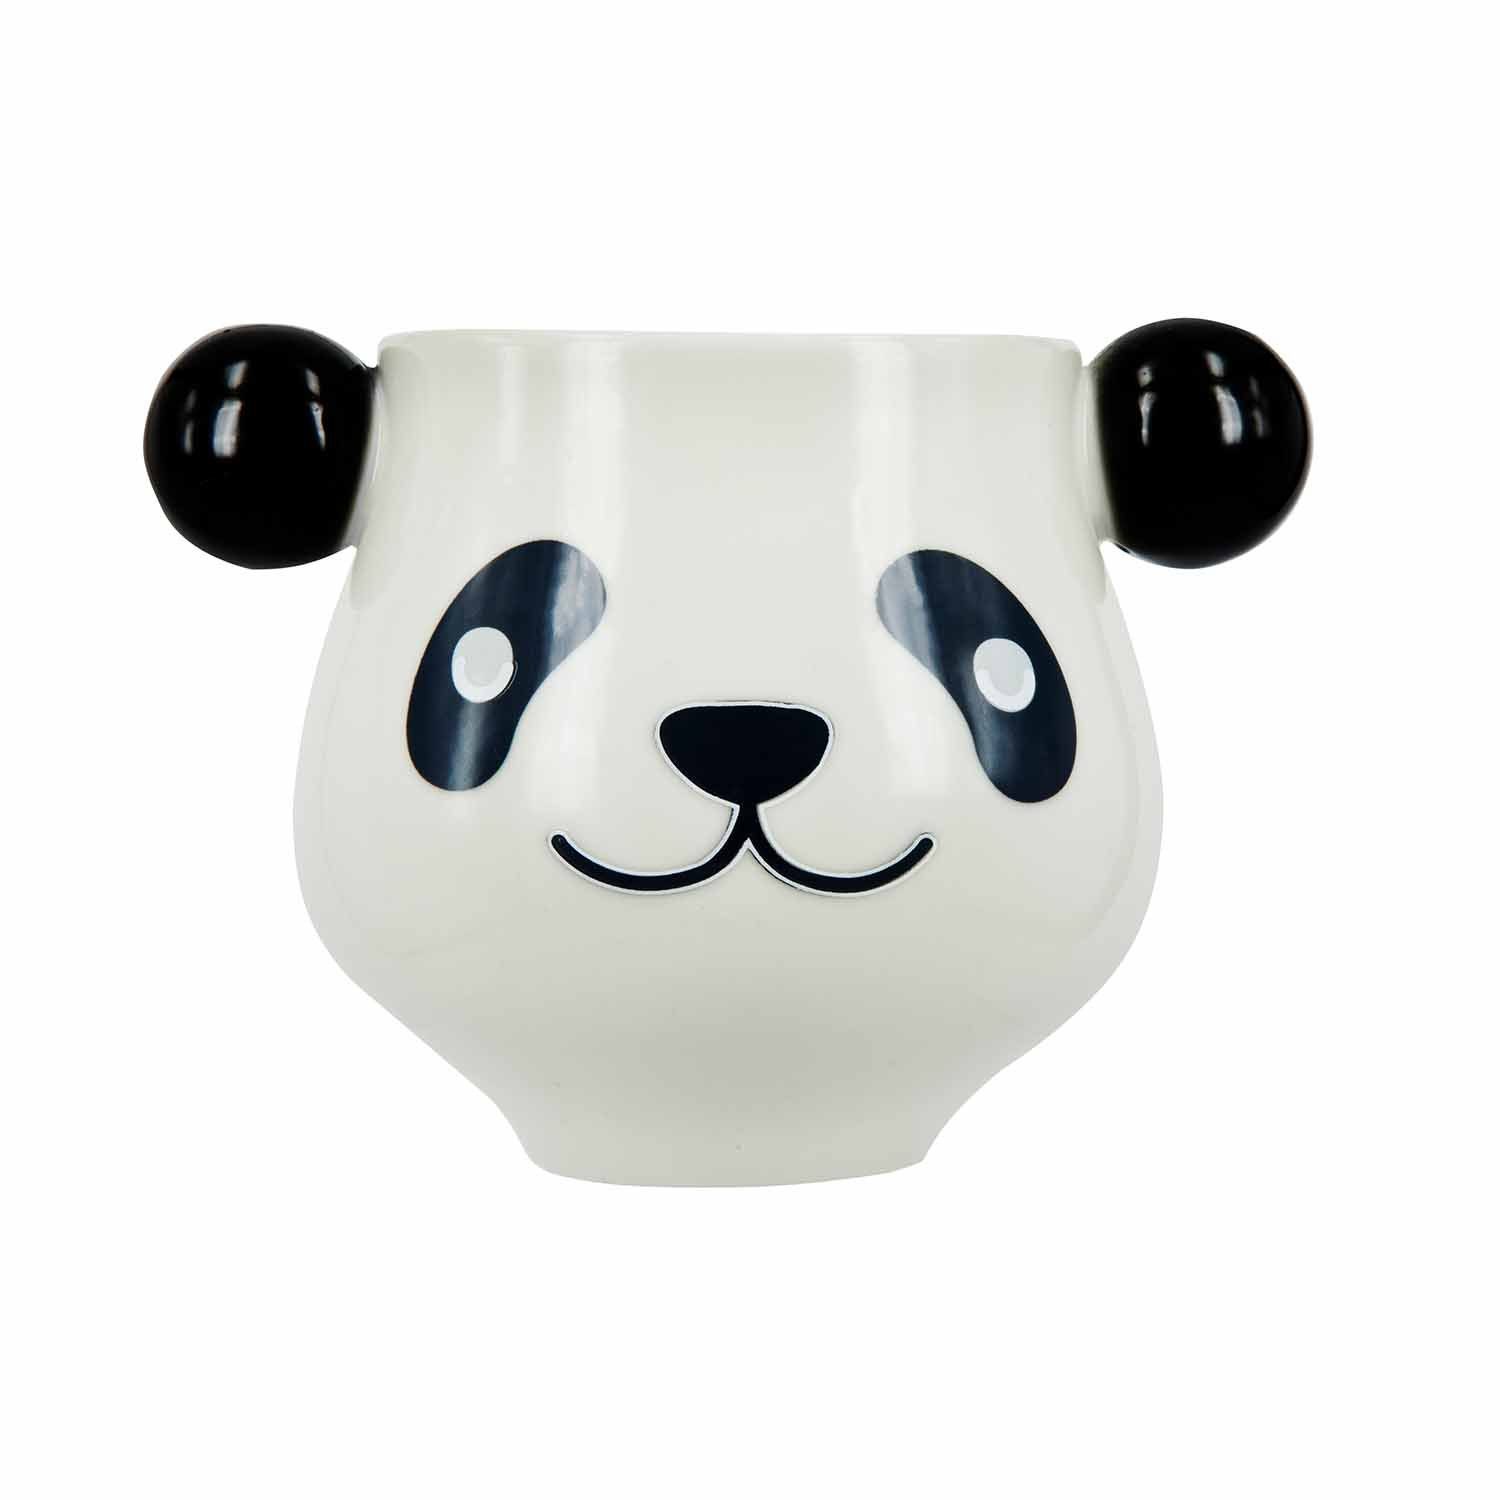 "Panda Up Tasse - mit Farbwechsel, Farbwechseleffekt Thumbs Mug"